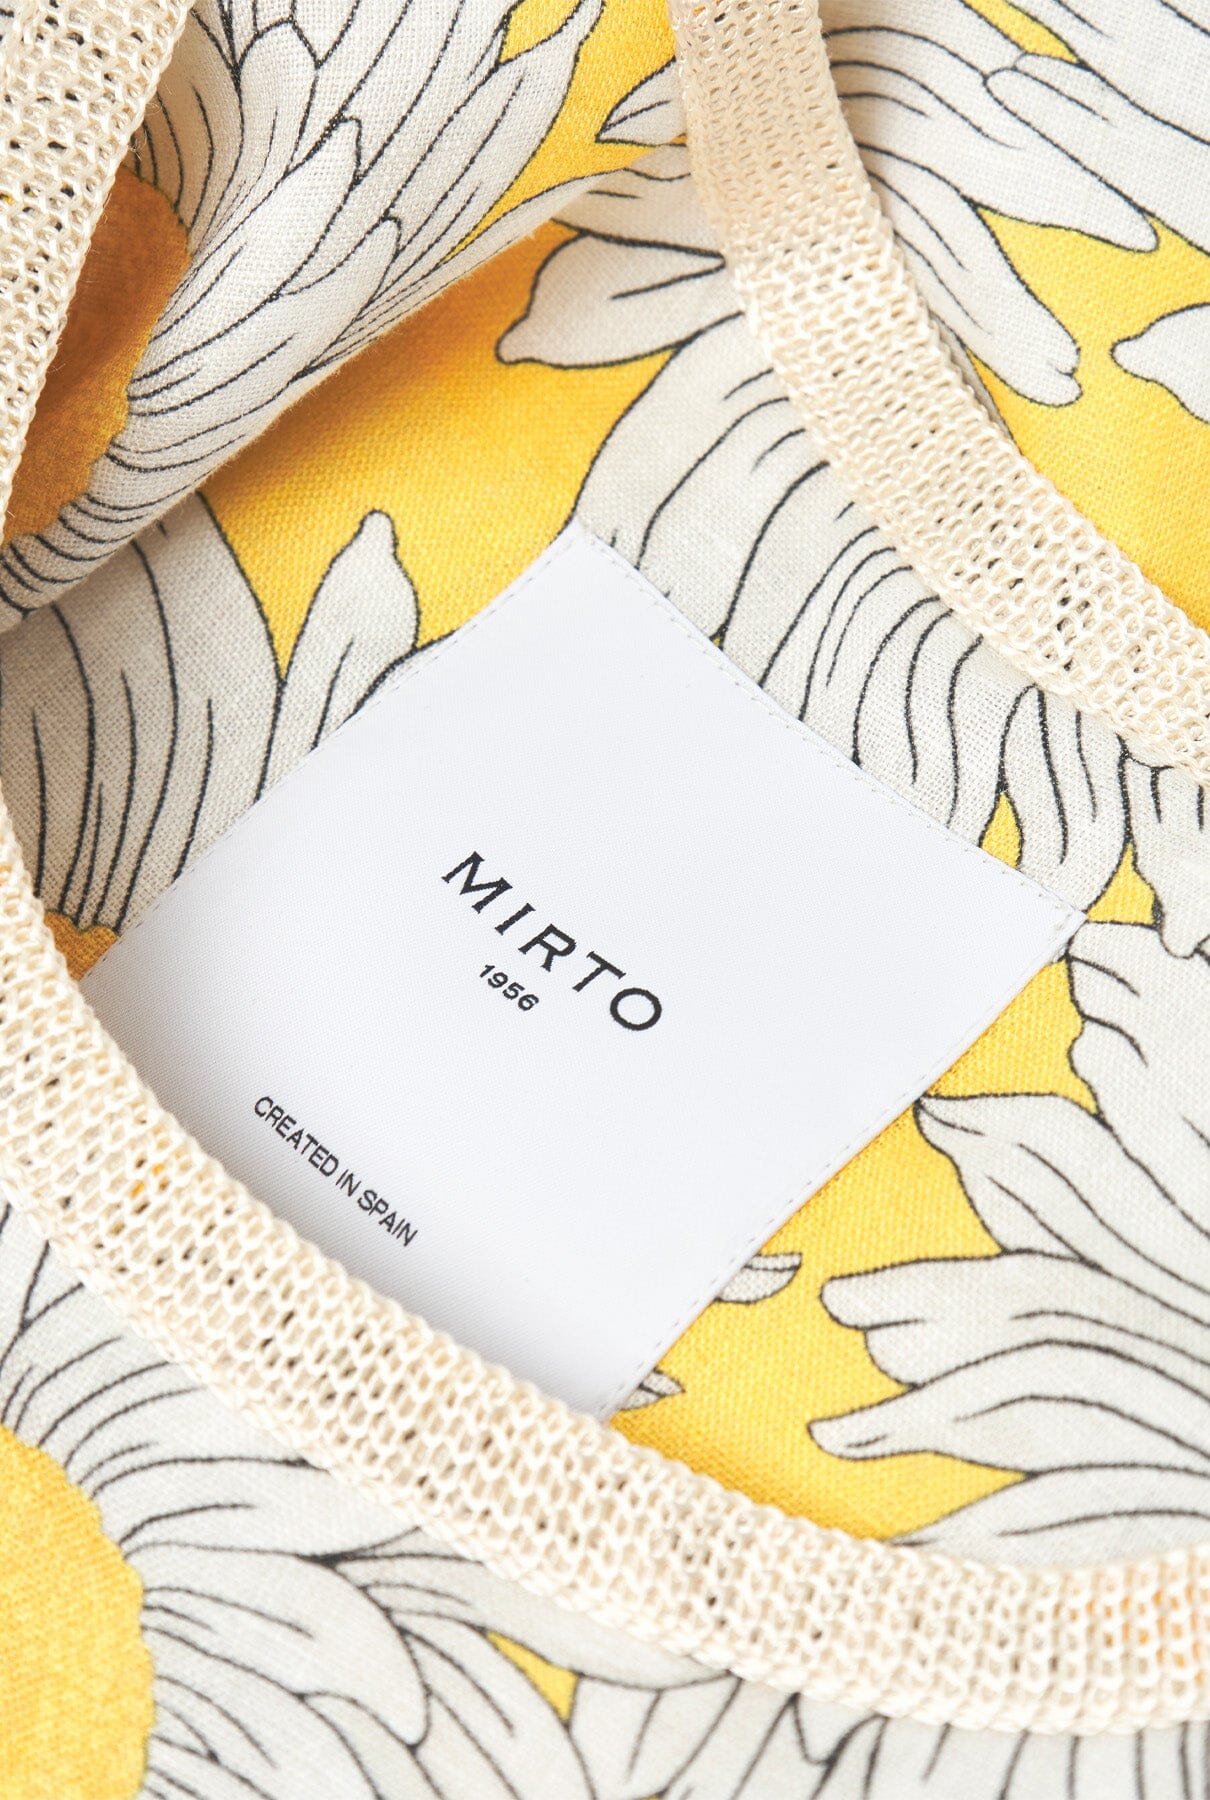 Floral print cotton tote hand bag Shoulder bags Mirto 